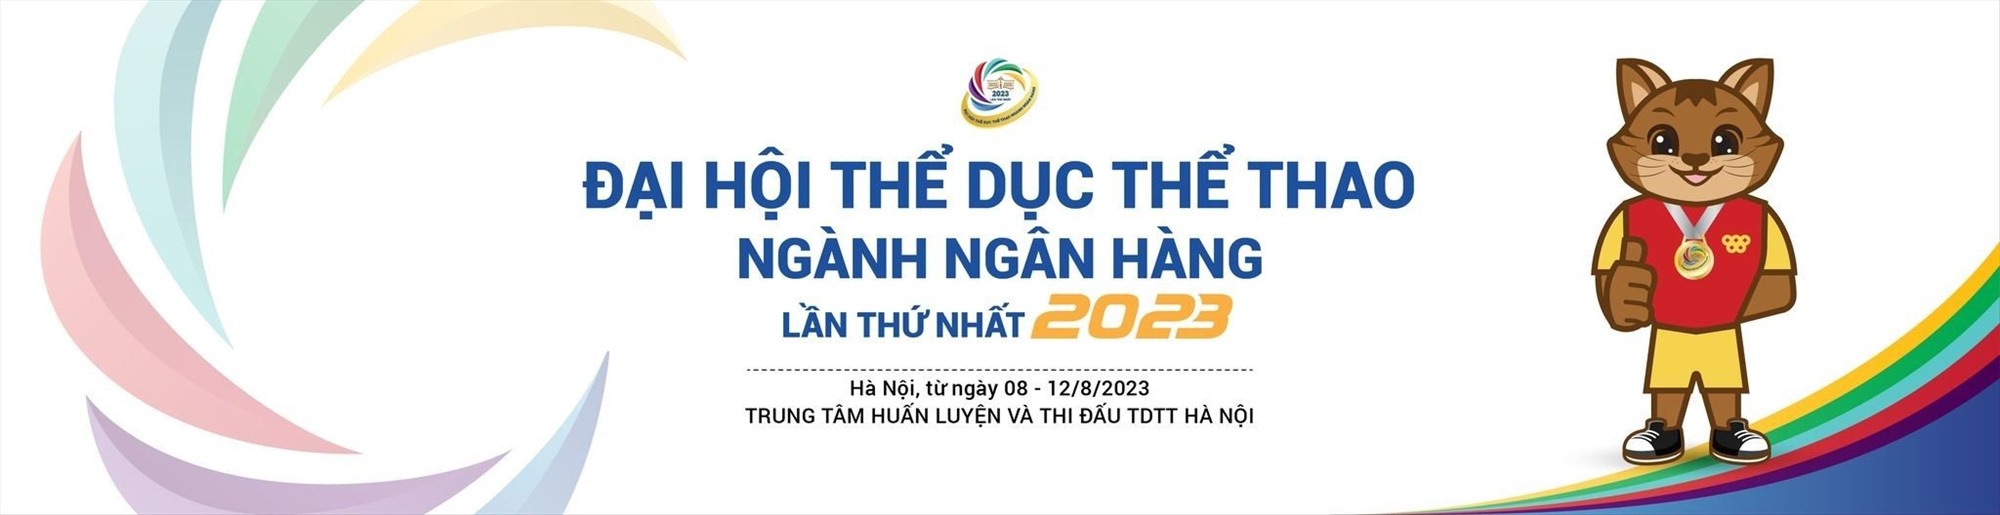 kienlongbank-gan-2600-van-dong-vien-thi-dau-tai-dai-hoi-the-duc-the-thao-nganh-ngan-hang-lan-thu-nhat